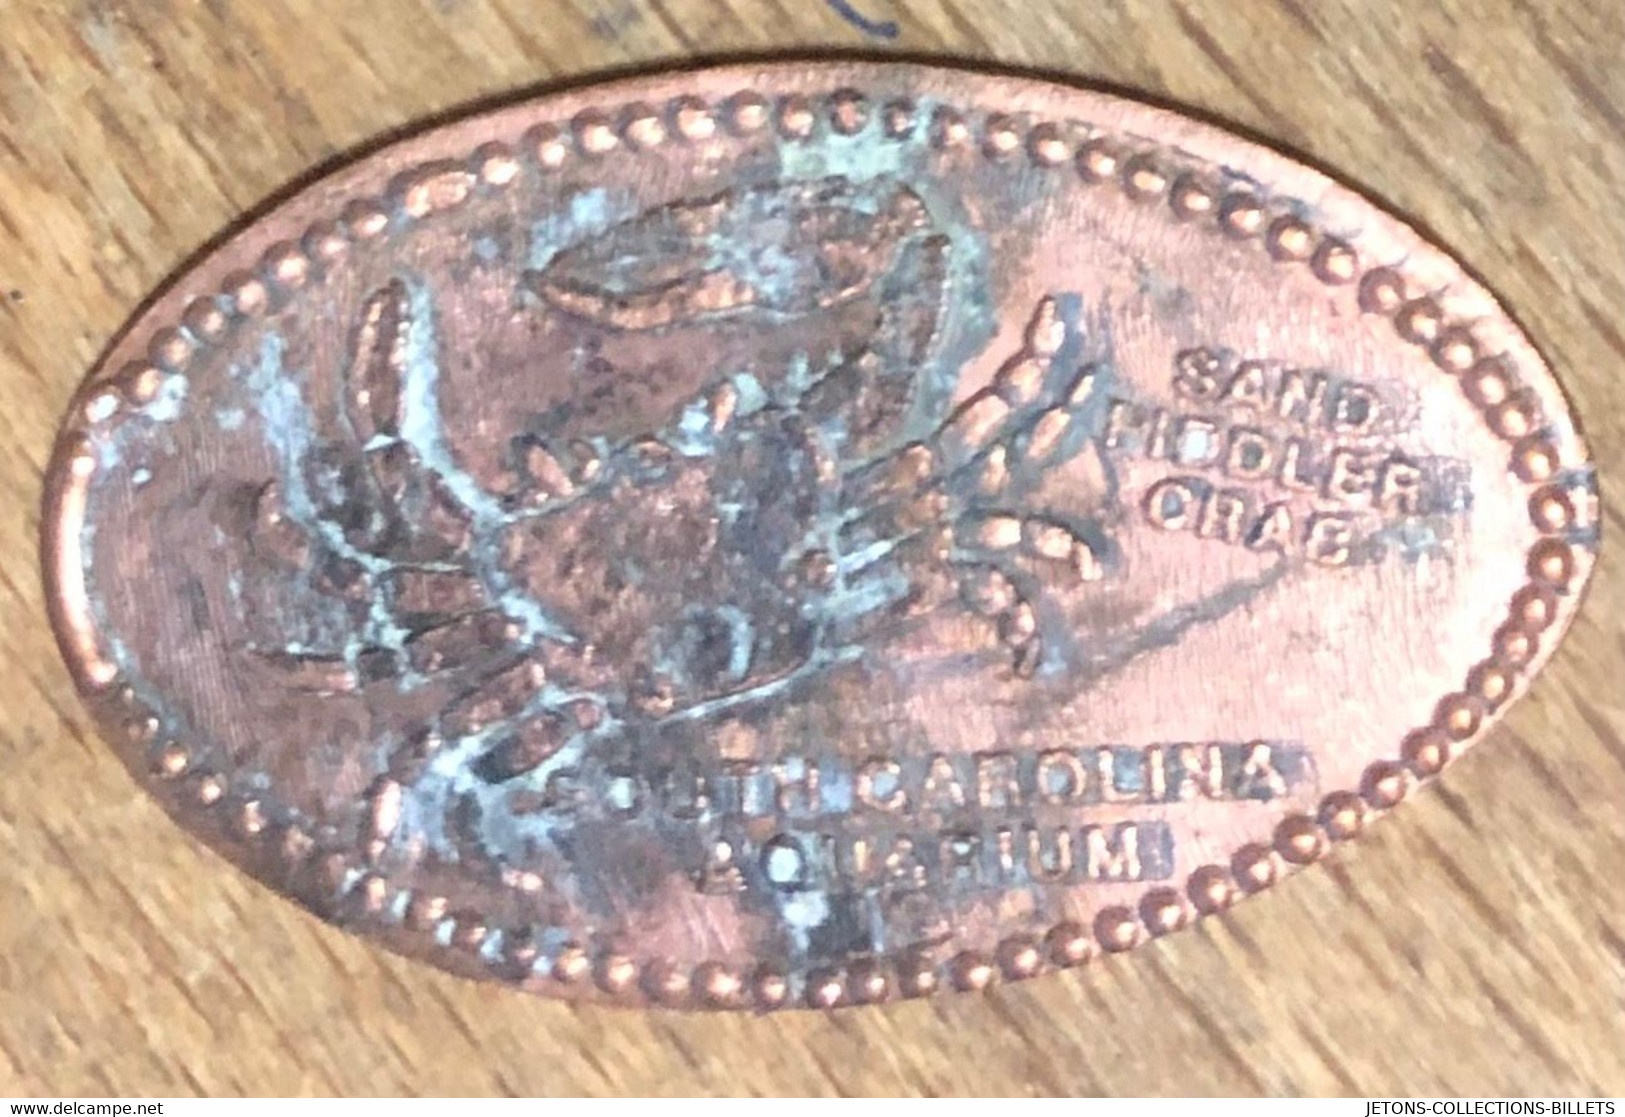 ÉTATS-UNIS USA SOUTH CAROLINA AQUARIUMS CRAS PIÈCE ÉCRASÉE PENNY ELONGATED COIN MEDAILLE TOURISTIQUE MEDALS TOKENS - Elongated Coins